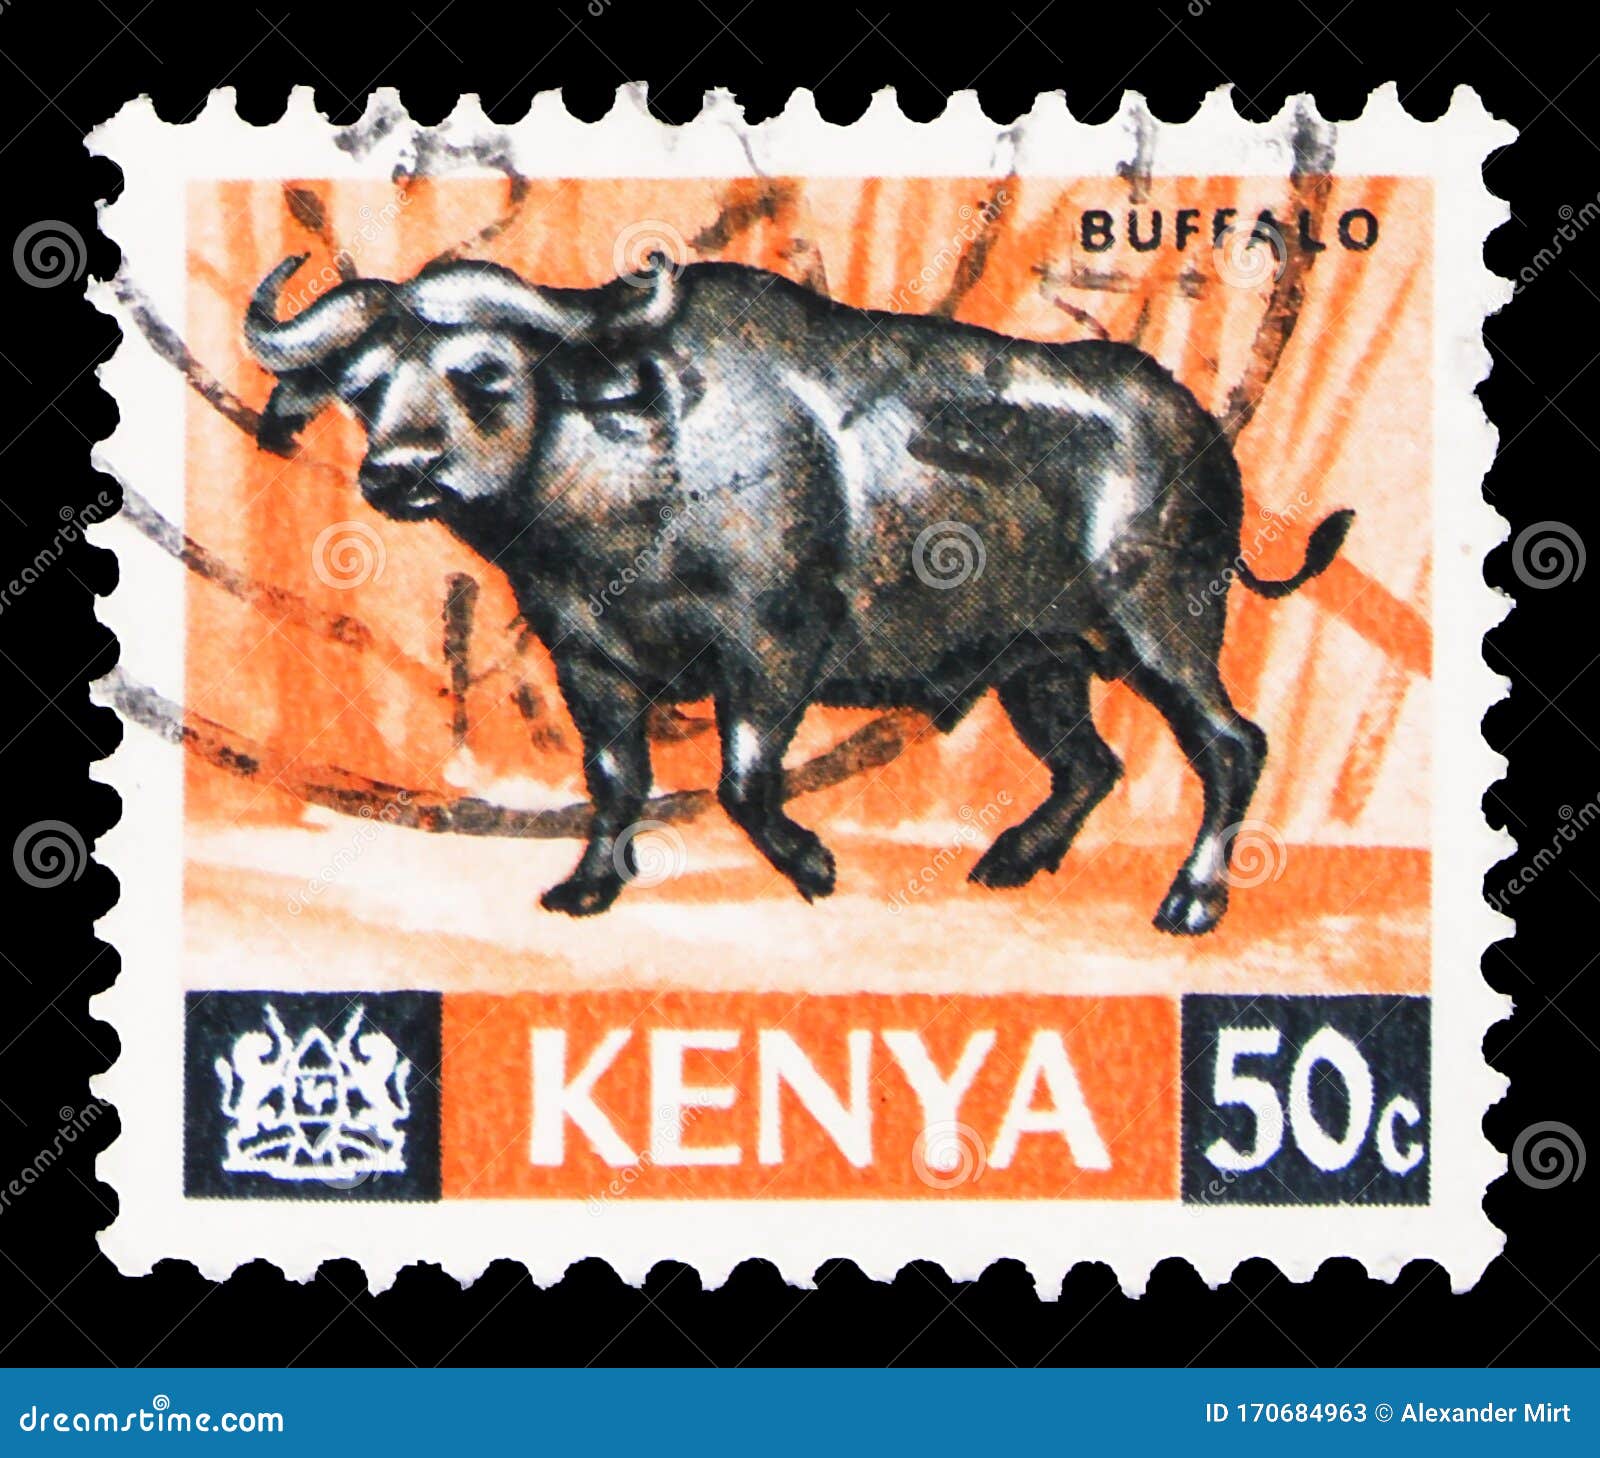 Postage Printed Kenya African Buffalo (Syncerus Caffer), African Fauna Serie, 50 Kenyan Cent, Circa 1966 Editorial Stock Photo - Image of philatelic, historic: 170684963